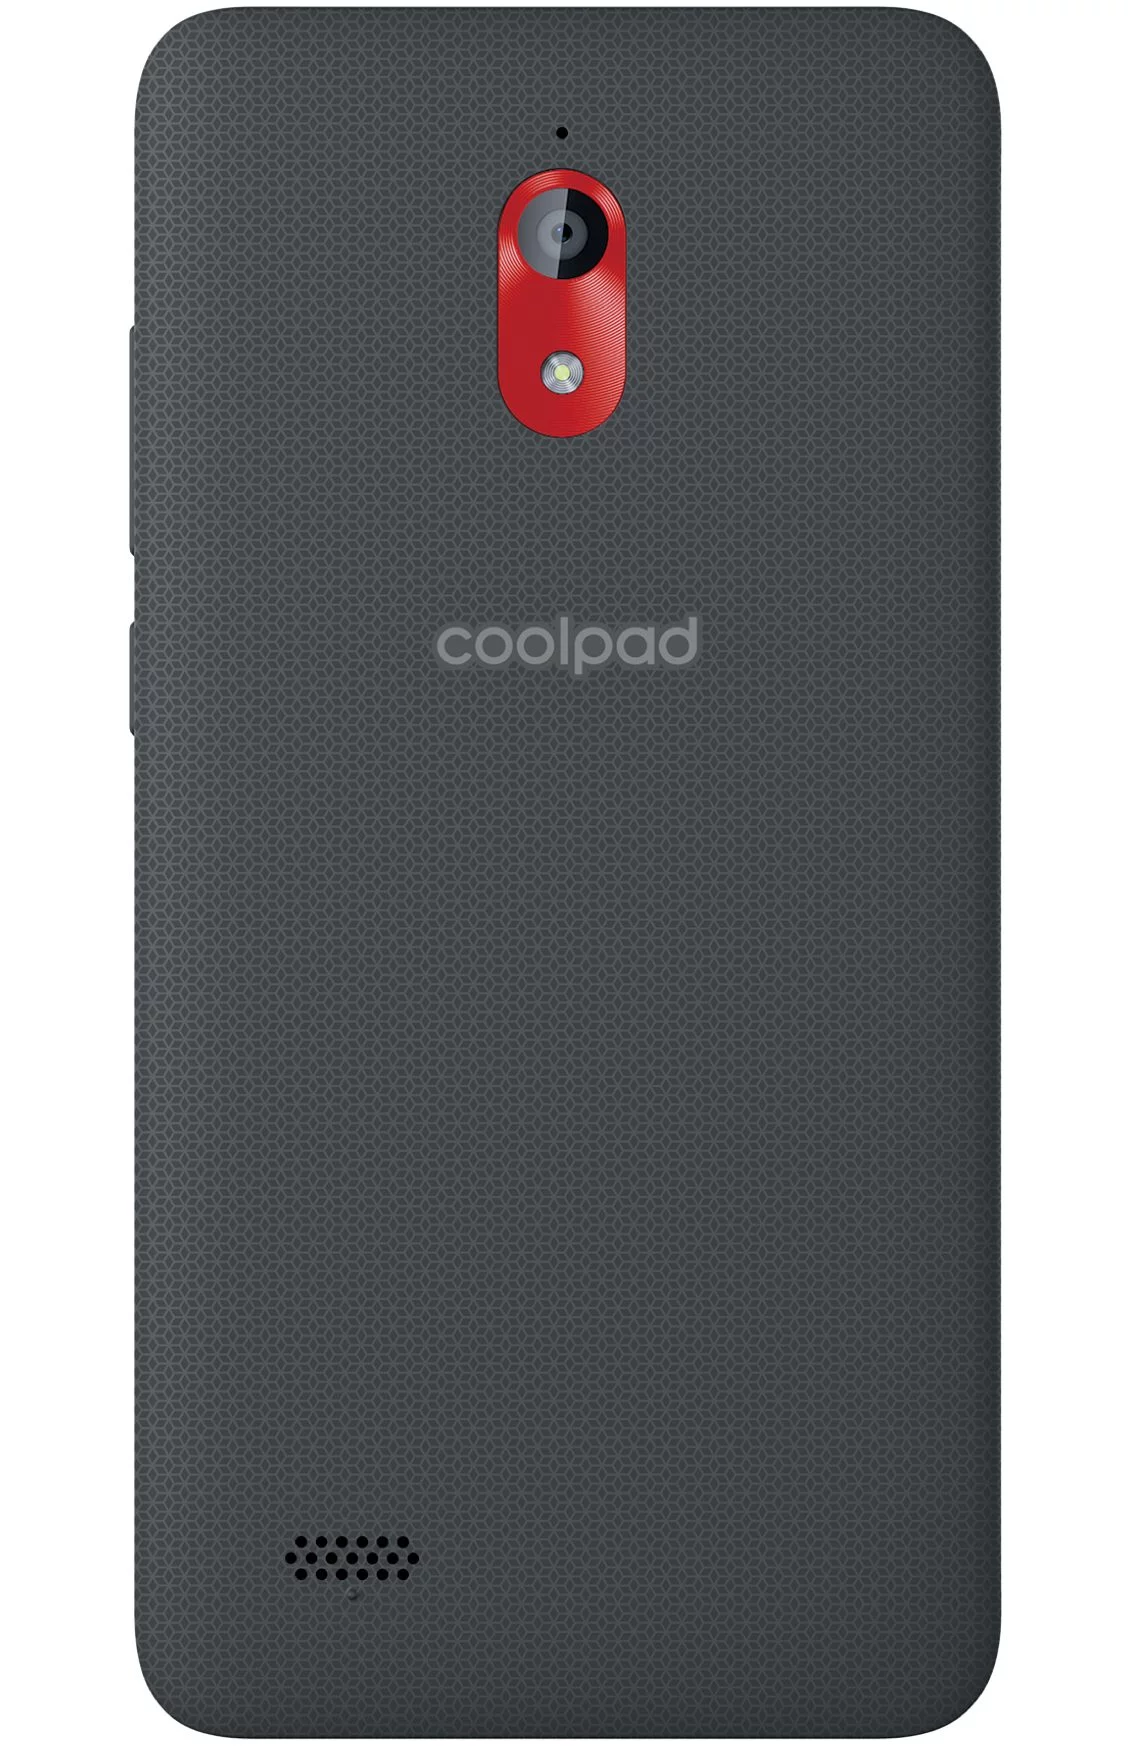 Coolpad Legacy GO Assurance Wireless Phones at Walmart